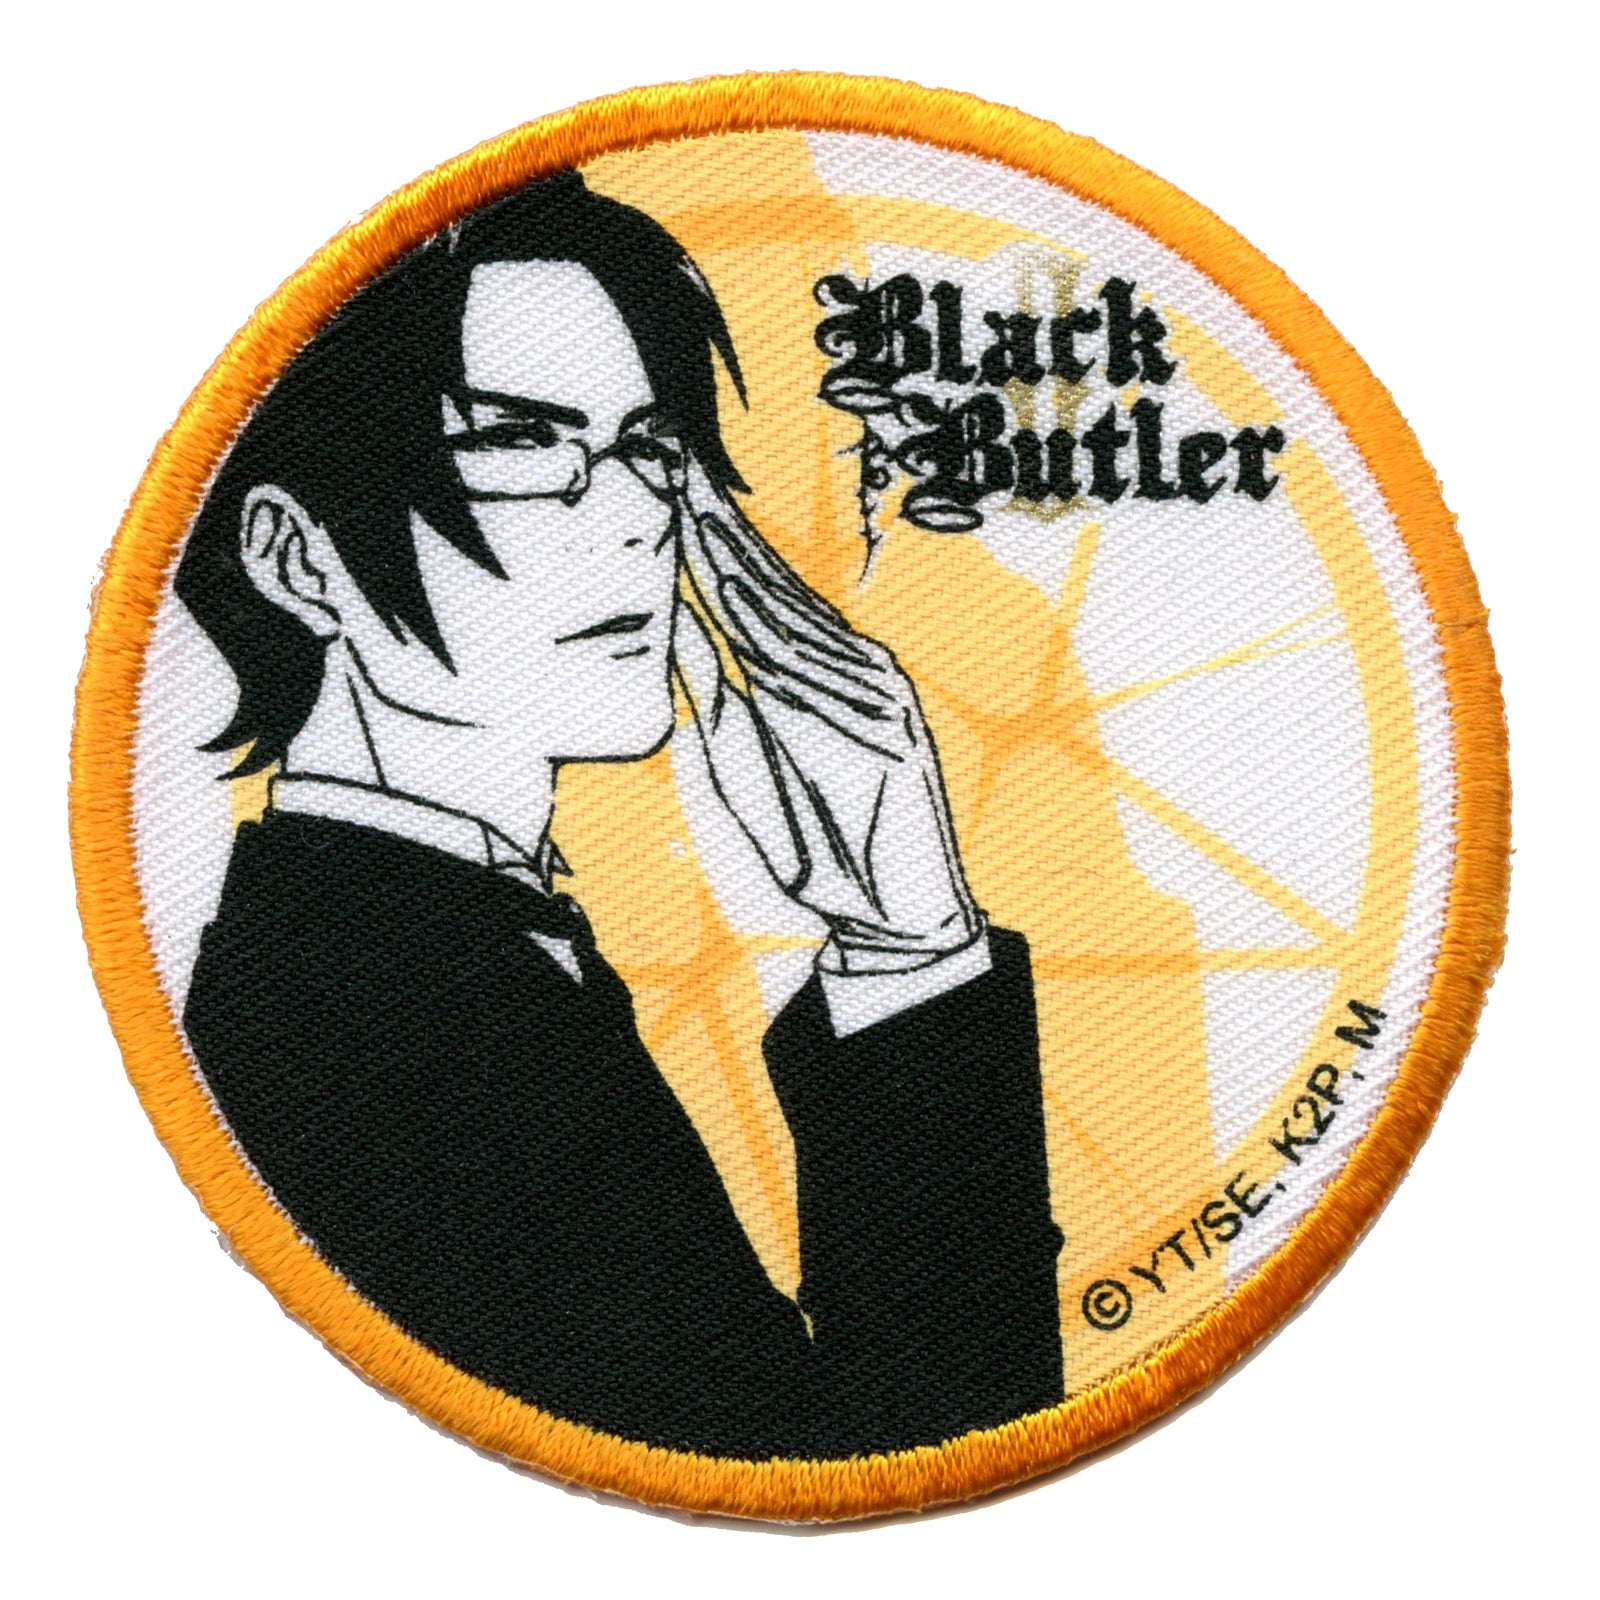 claude black butler